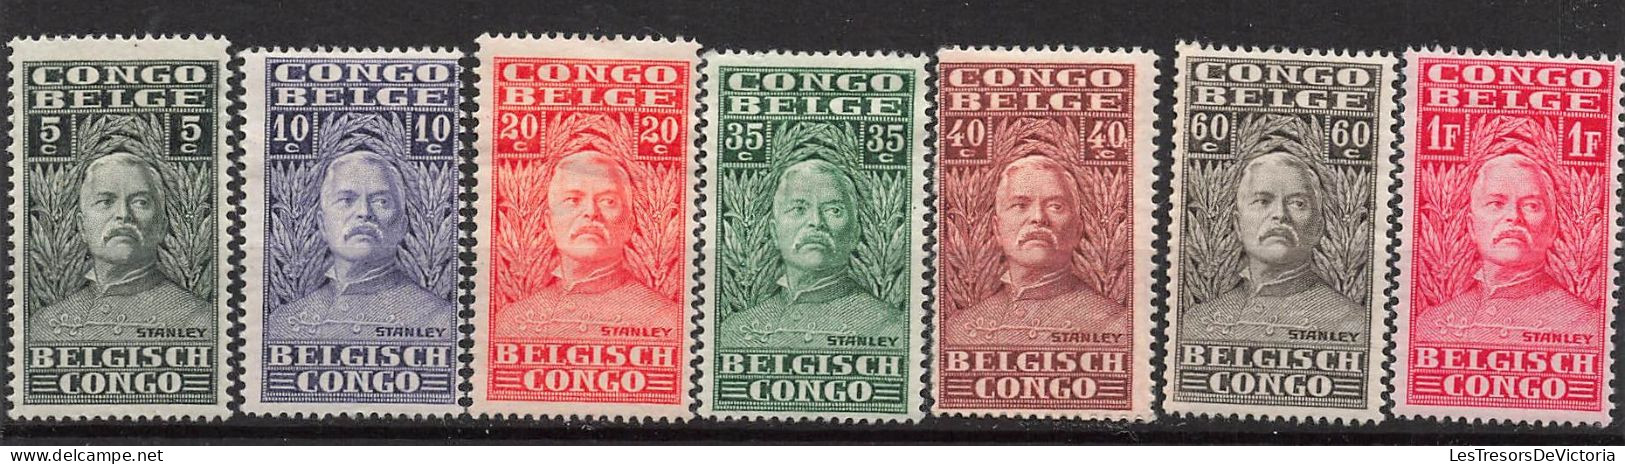 Timbre - Congo Belge - 1928 - COB135/49* - Explorateur Henri Morton Stanley - Cote 50 - Unused Stamps